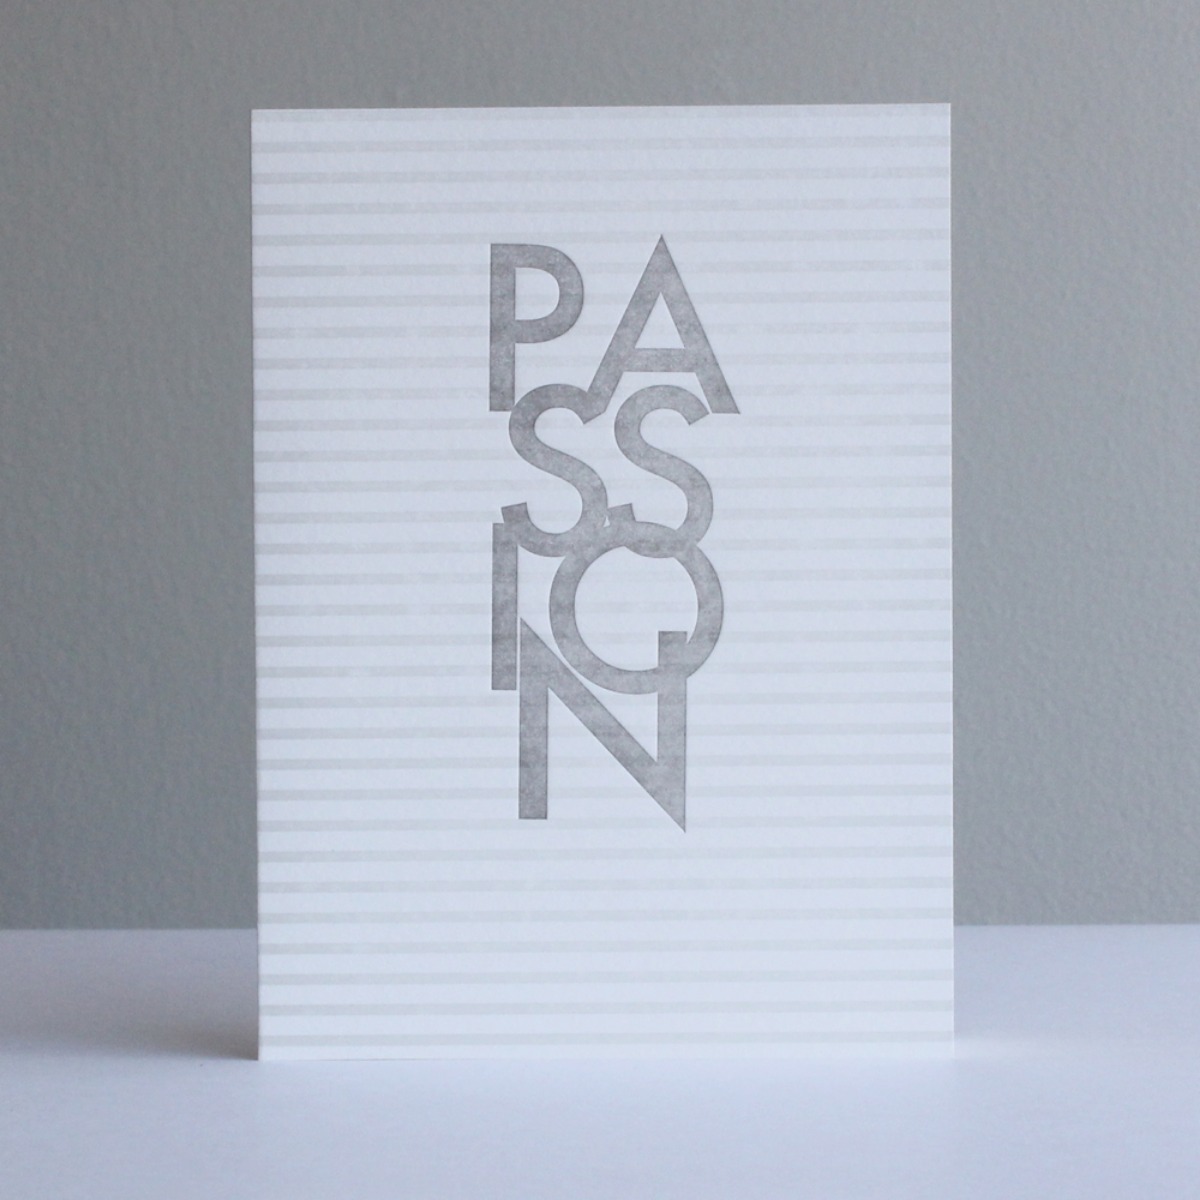 Letterpress card_15_PASSION